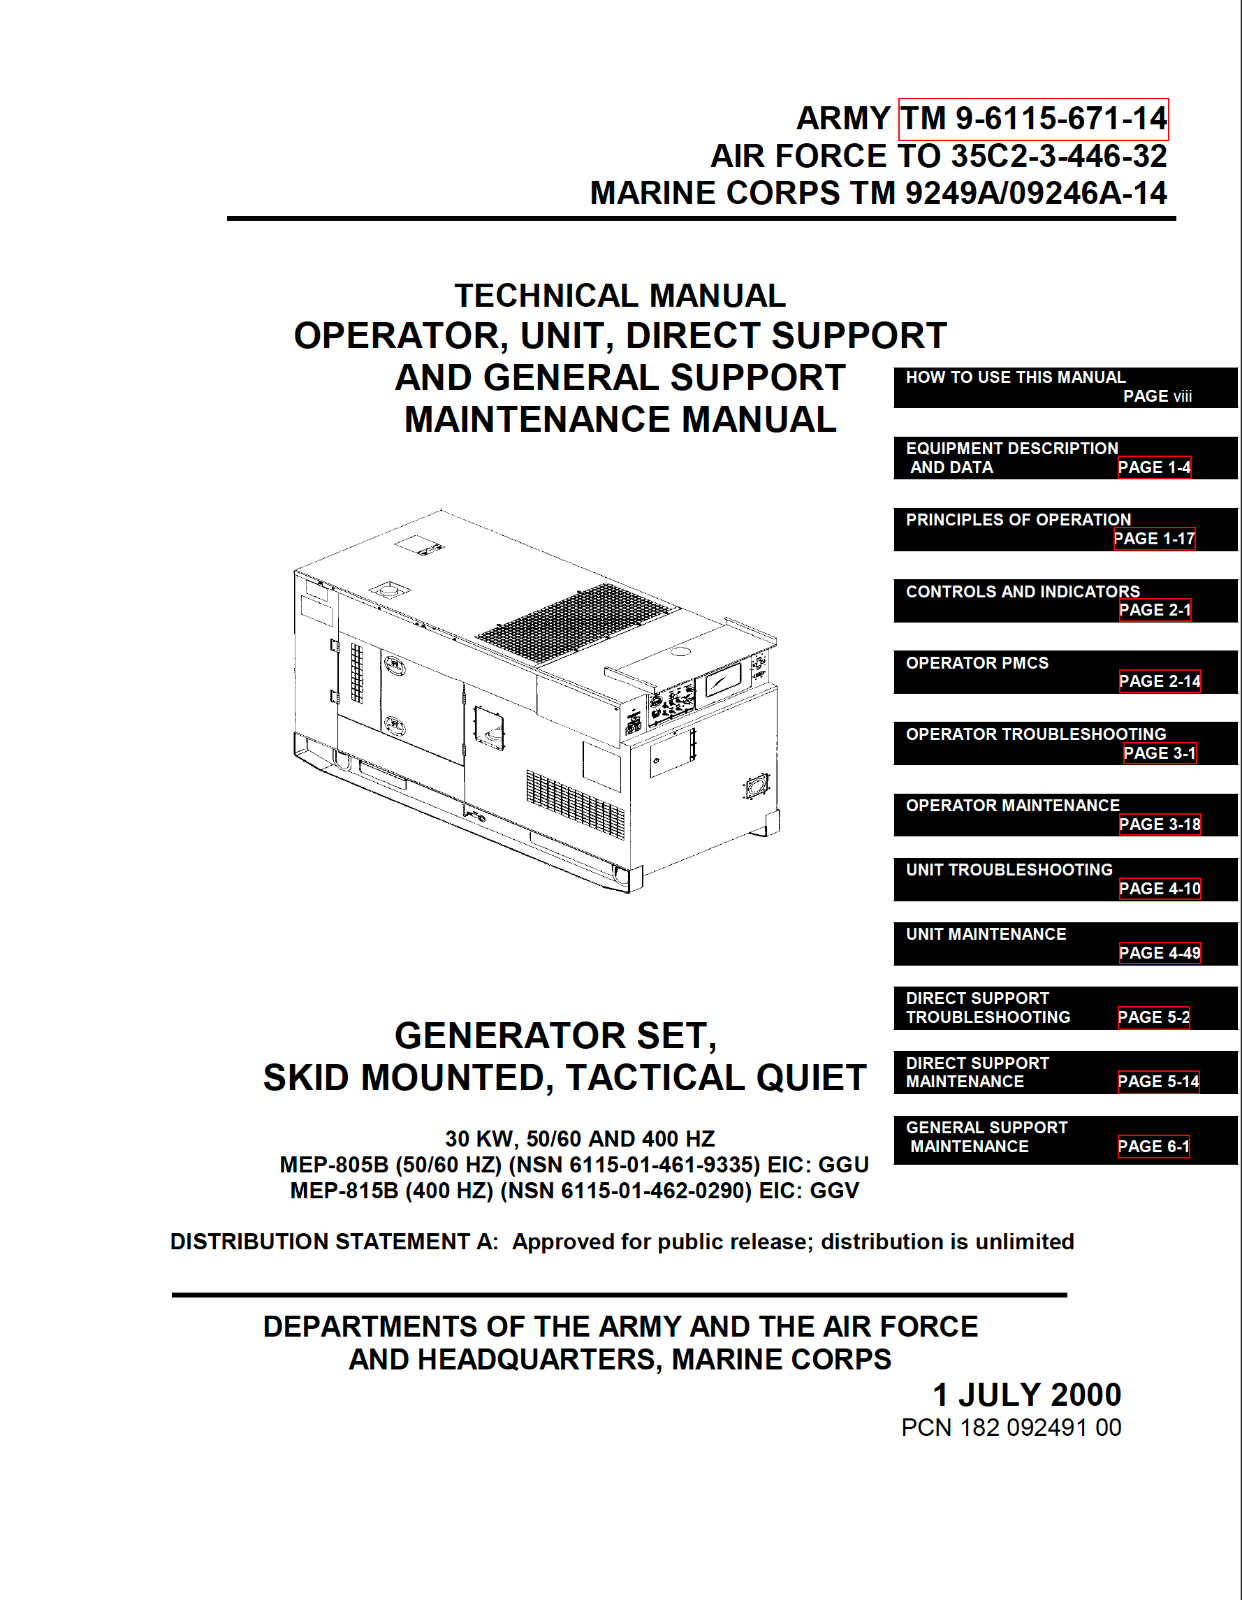 542 p. 30kW TACTICAL QUIET GENERATOR SET MEP-805A MEP-815A Operator Manual on CD